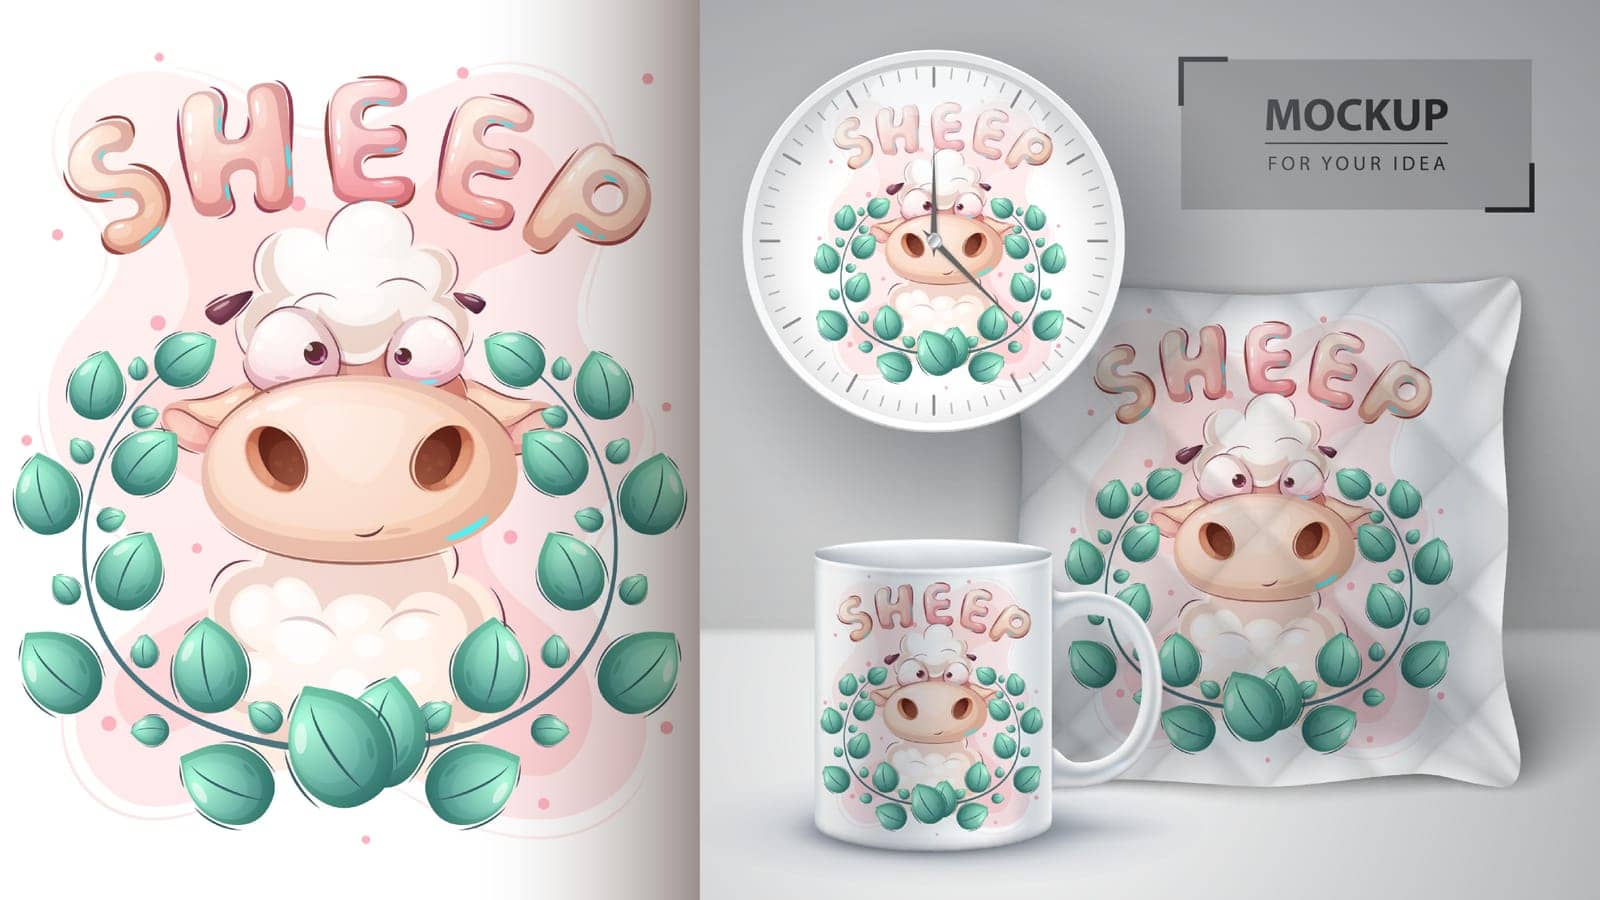 Cartoon character pretty animal lamb - poster and merchandising. Vector eps 10